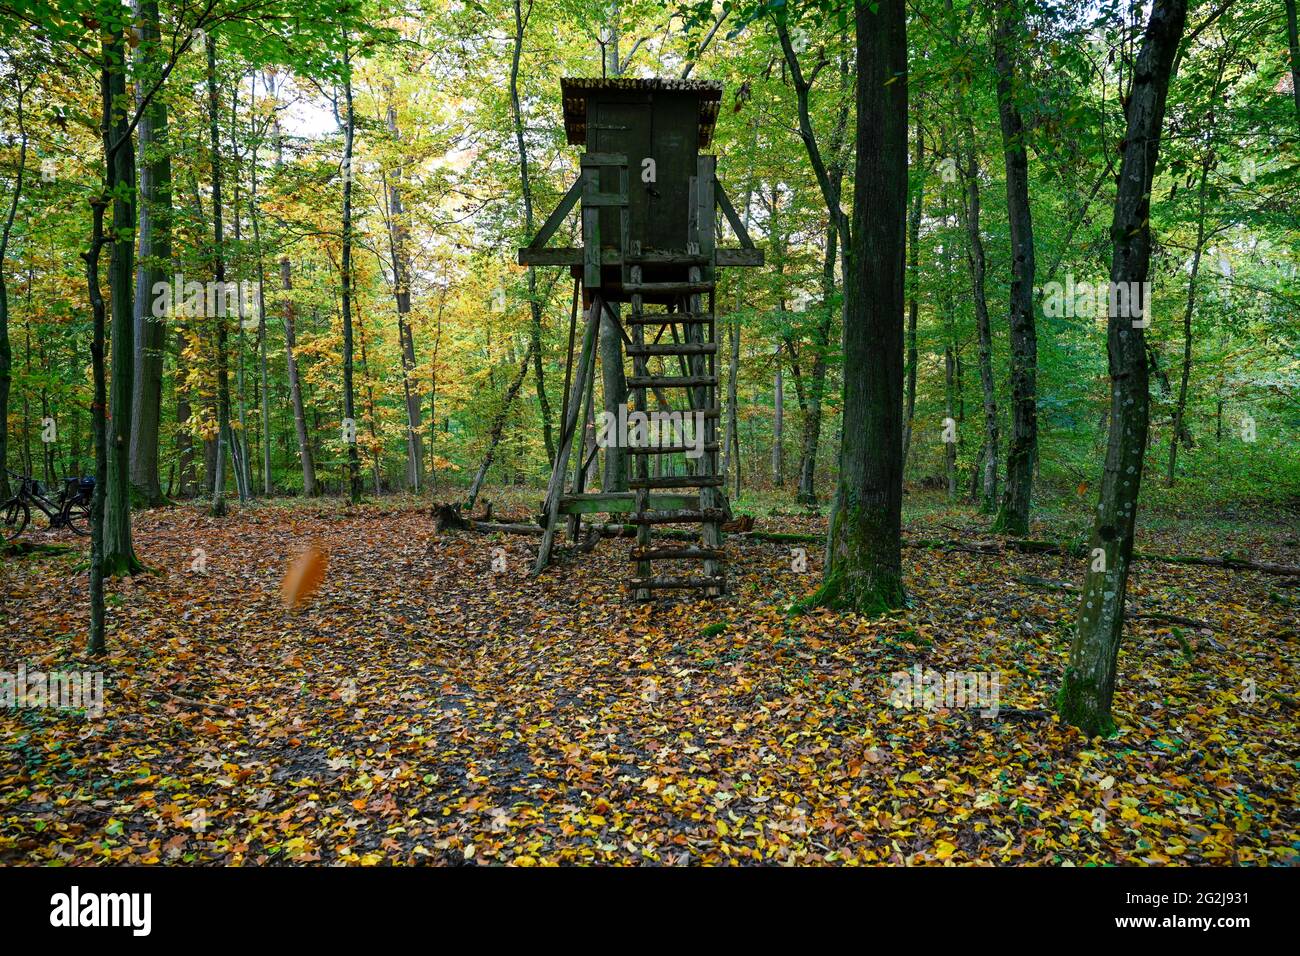 Allemagne, Bade-Wurtemberg, siège de chasseur dans la forêt d'automne. Banque D'Images